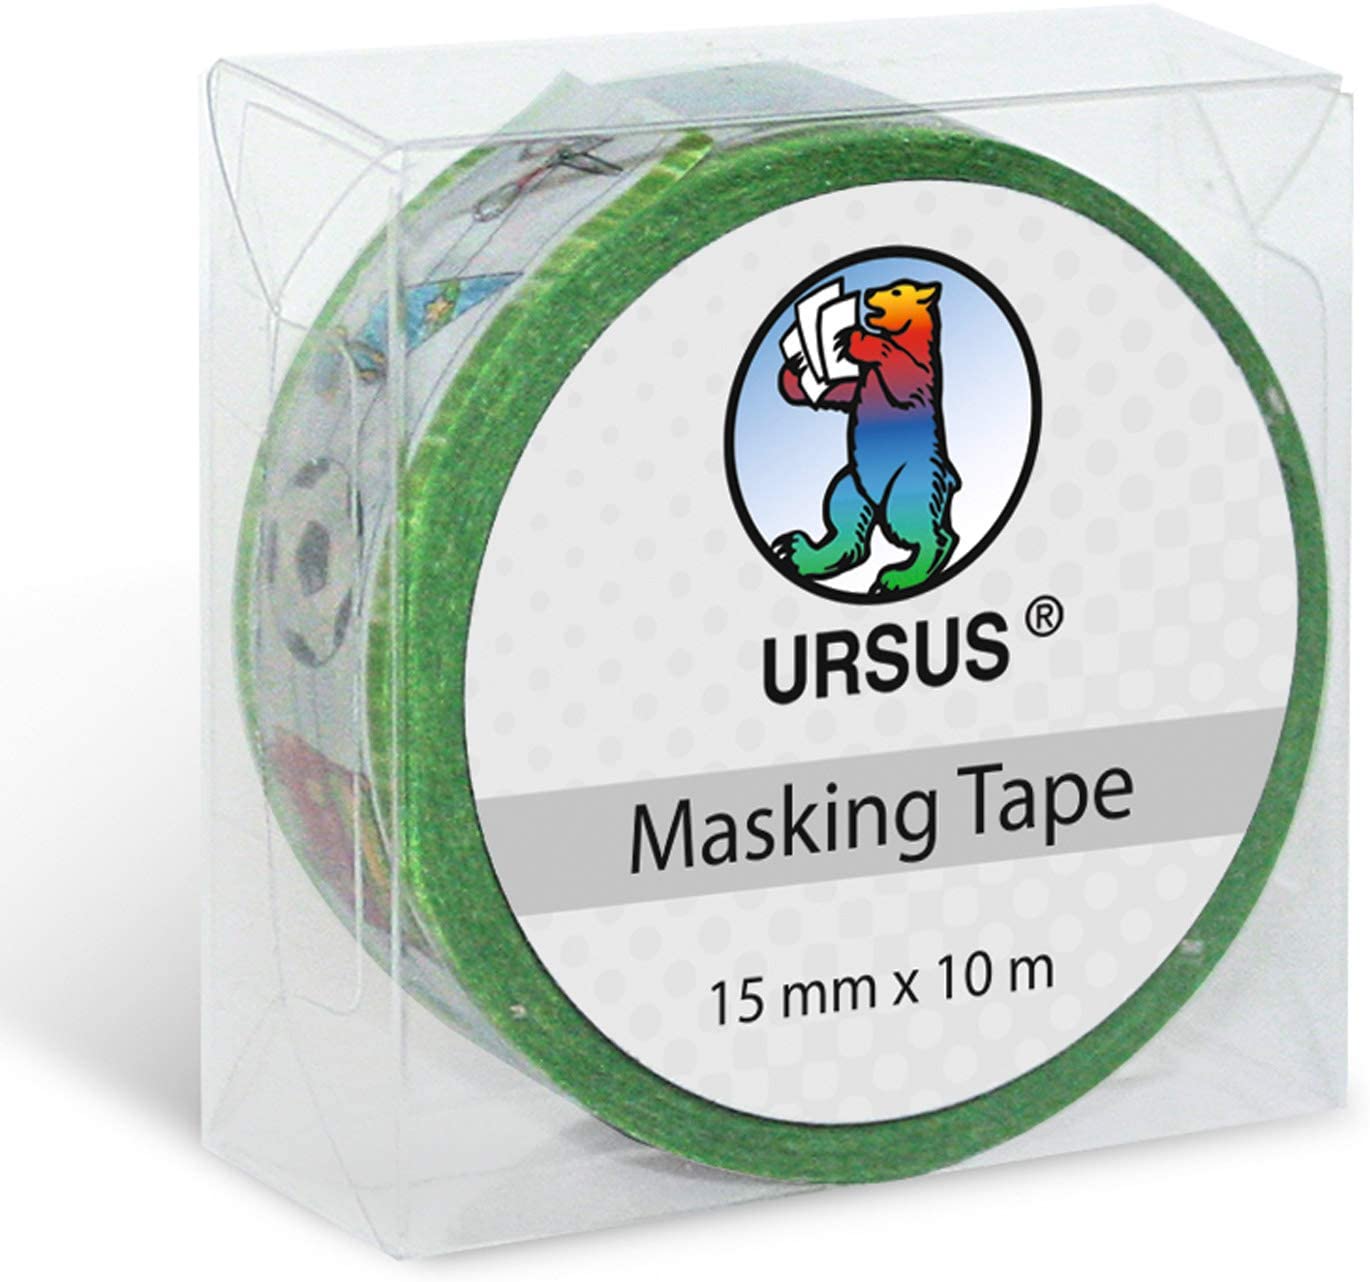 Masking Tape "Schule macht Spass", 1 Rolle, 15mm x 10m